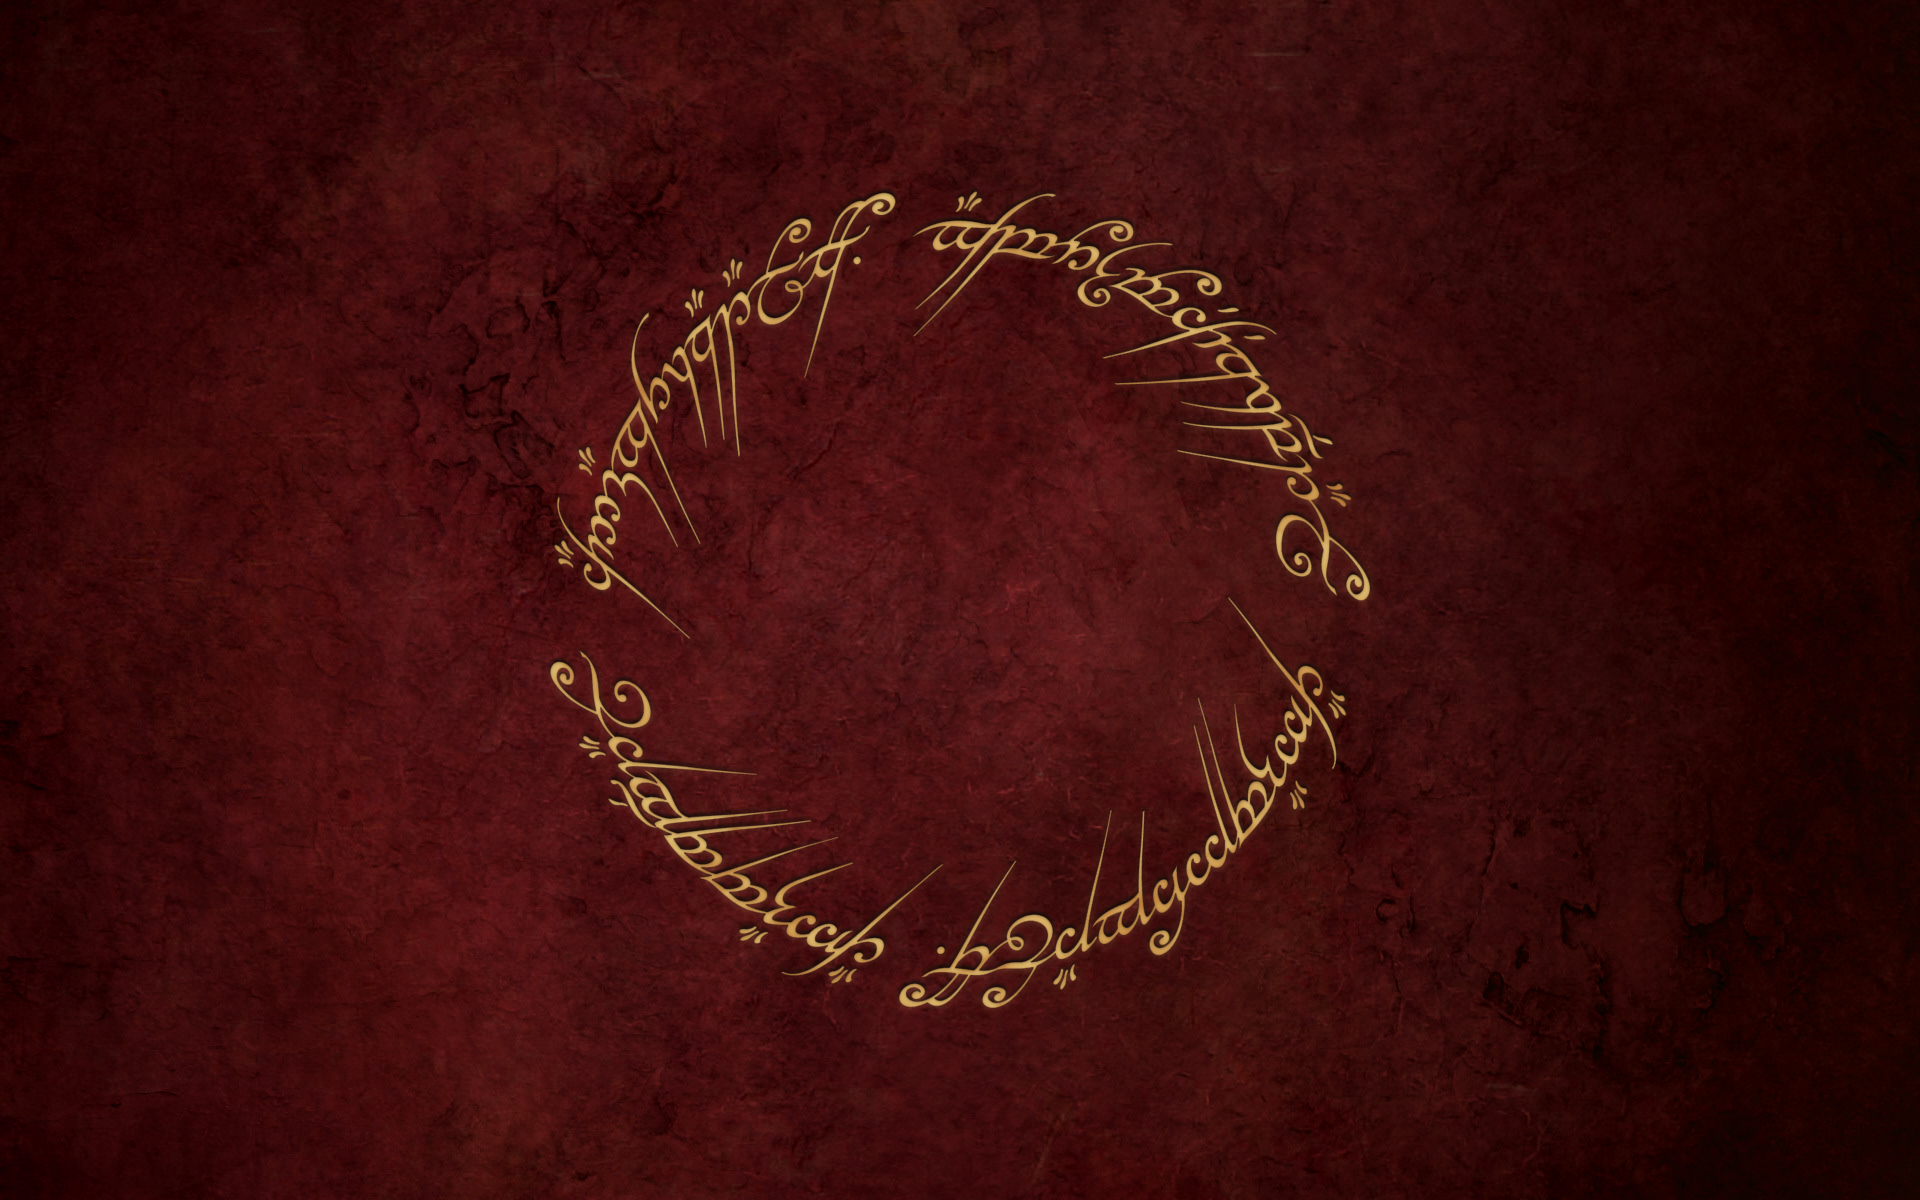 Кольцо всевластия Lord of Rings